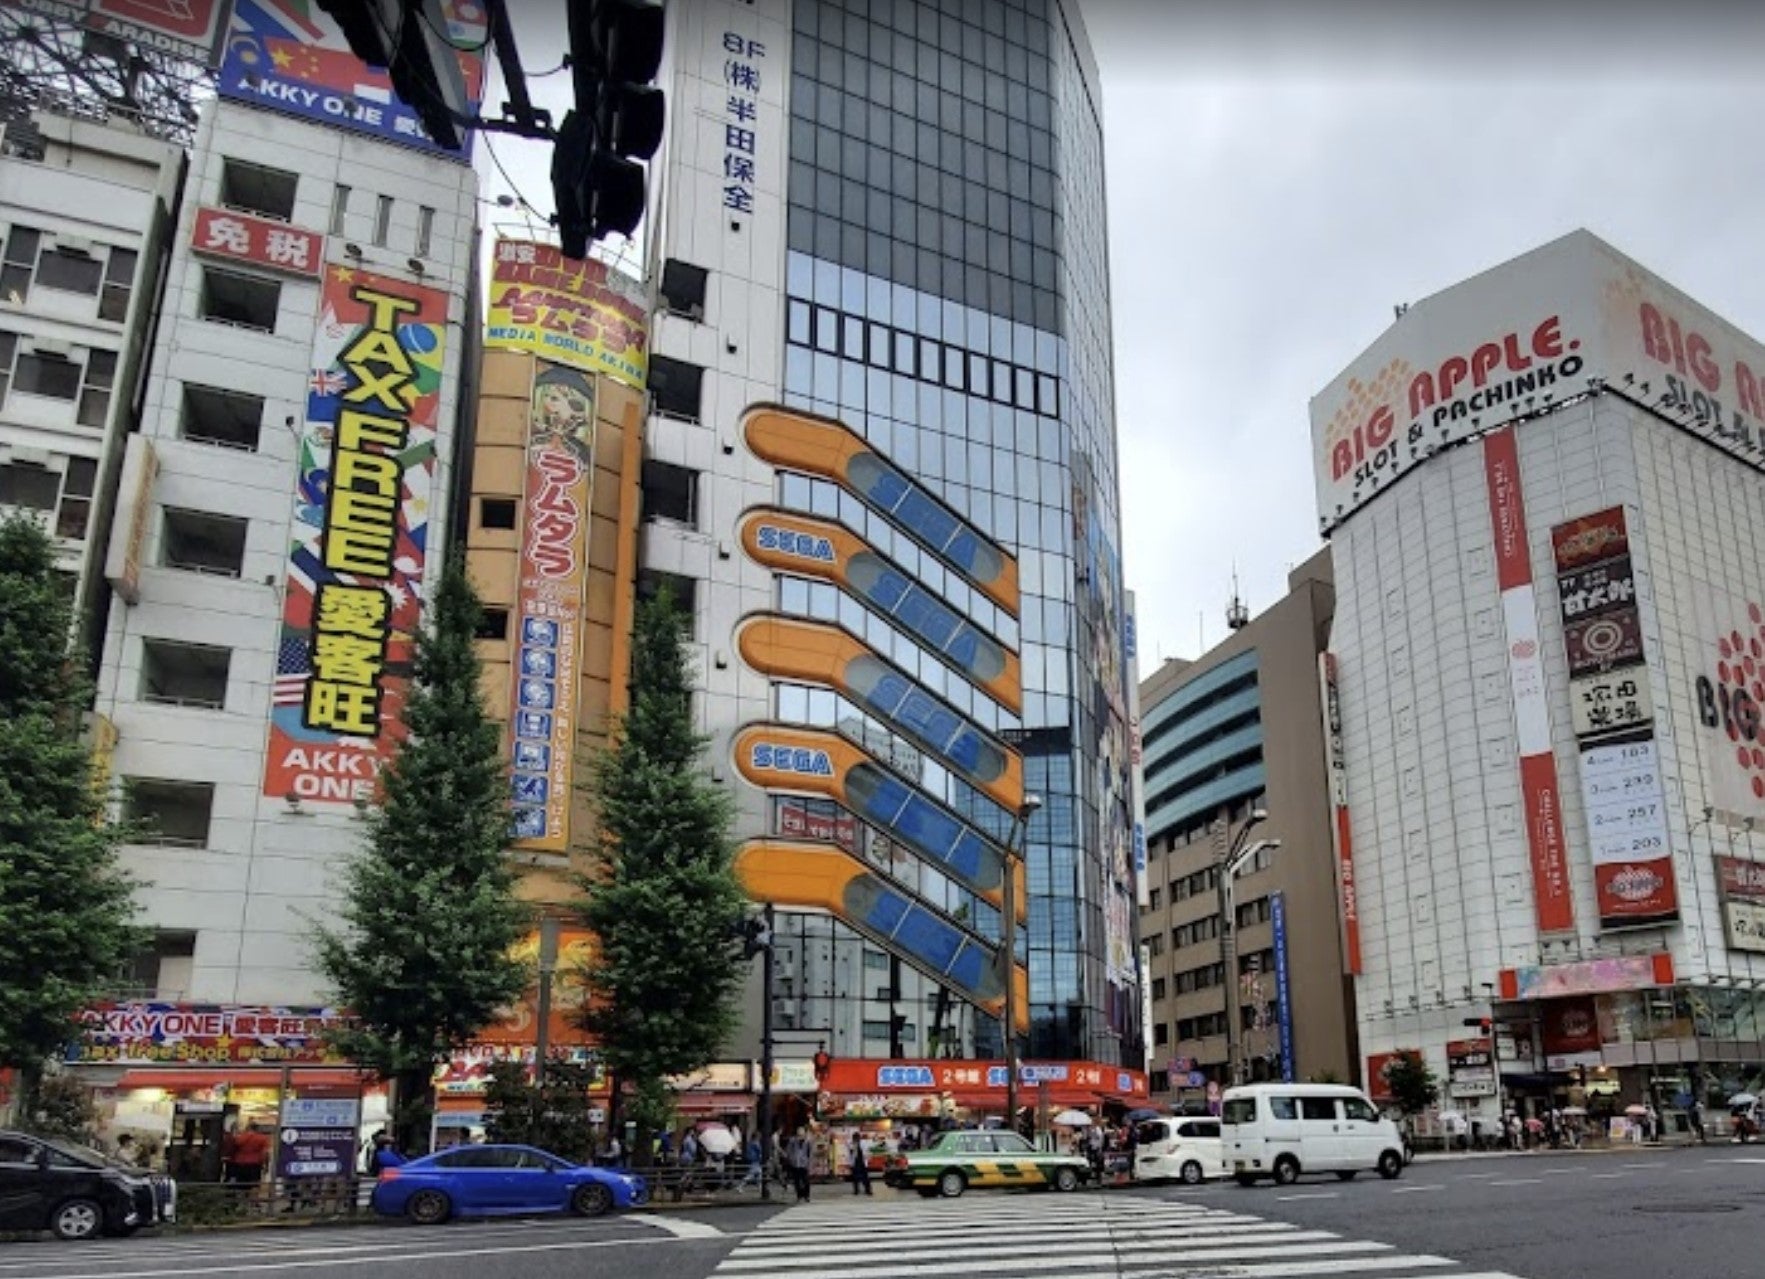 Sega Akihabara Arcade Building 4 in its glory days (Image: Google)